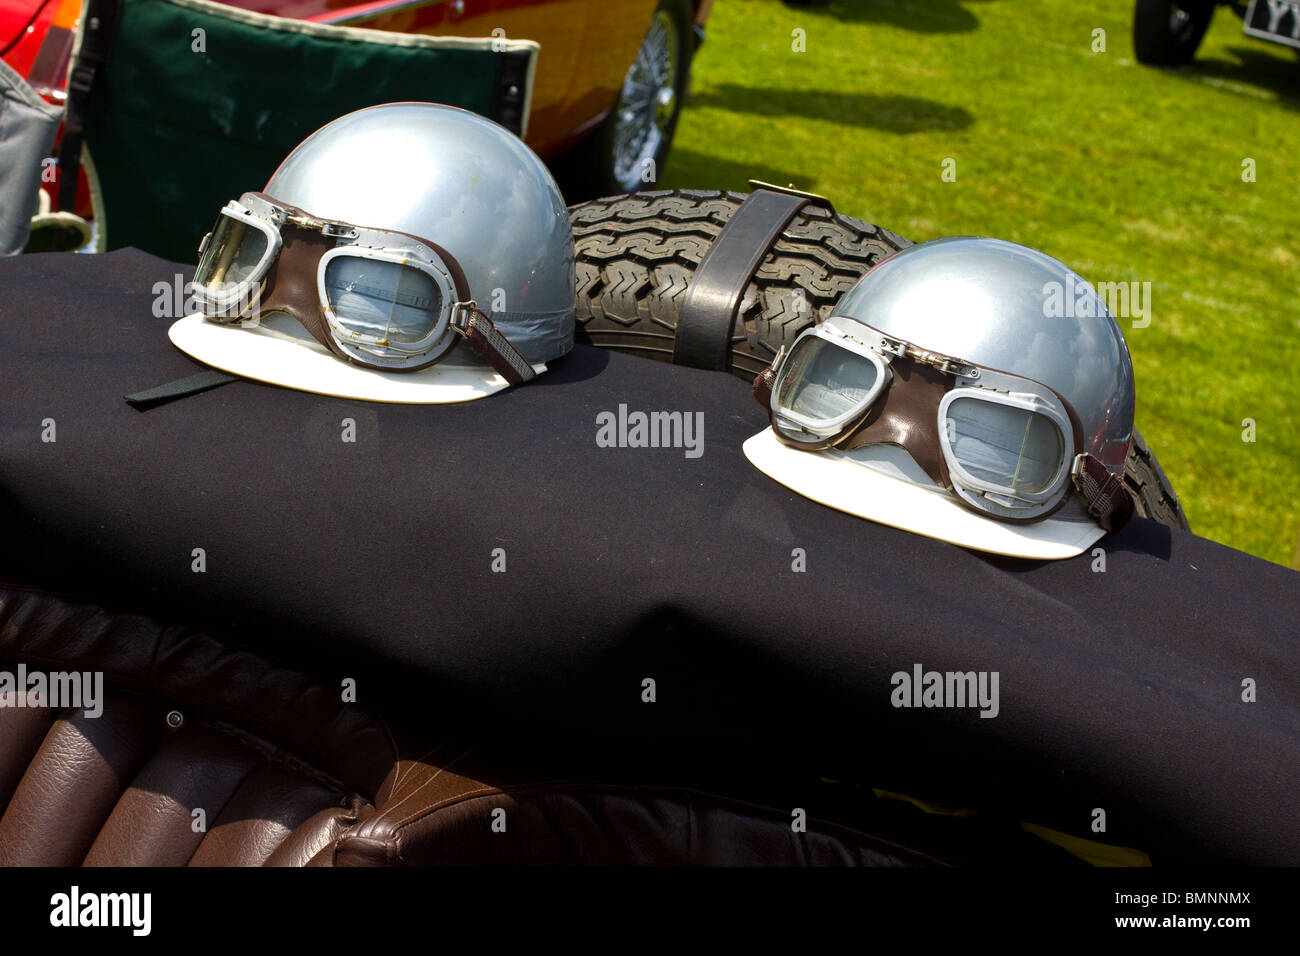 Vintage Aviator Motorcycle Helmet Goggles Outdoor Riding Glasses Adult Men Women